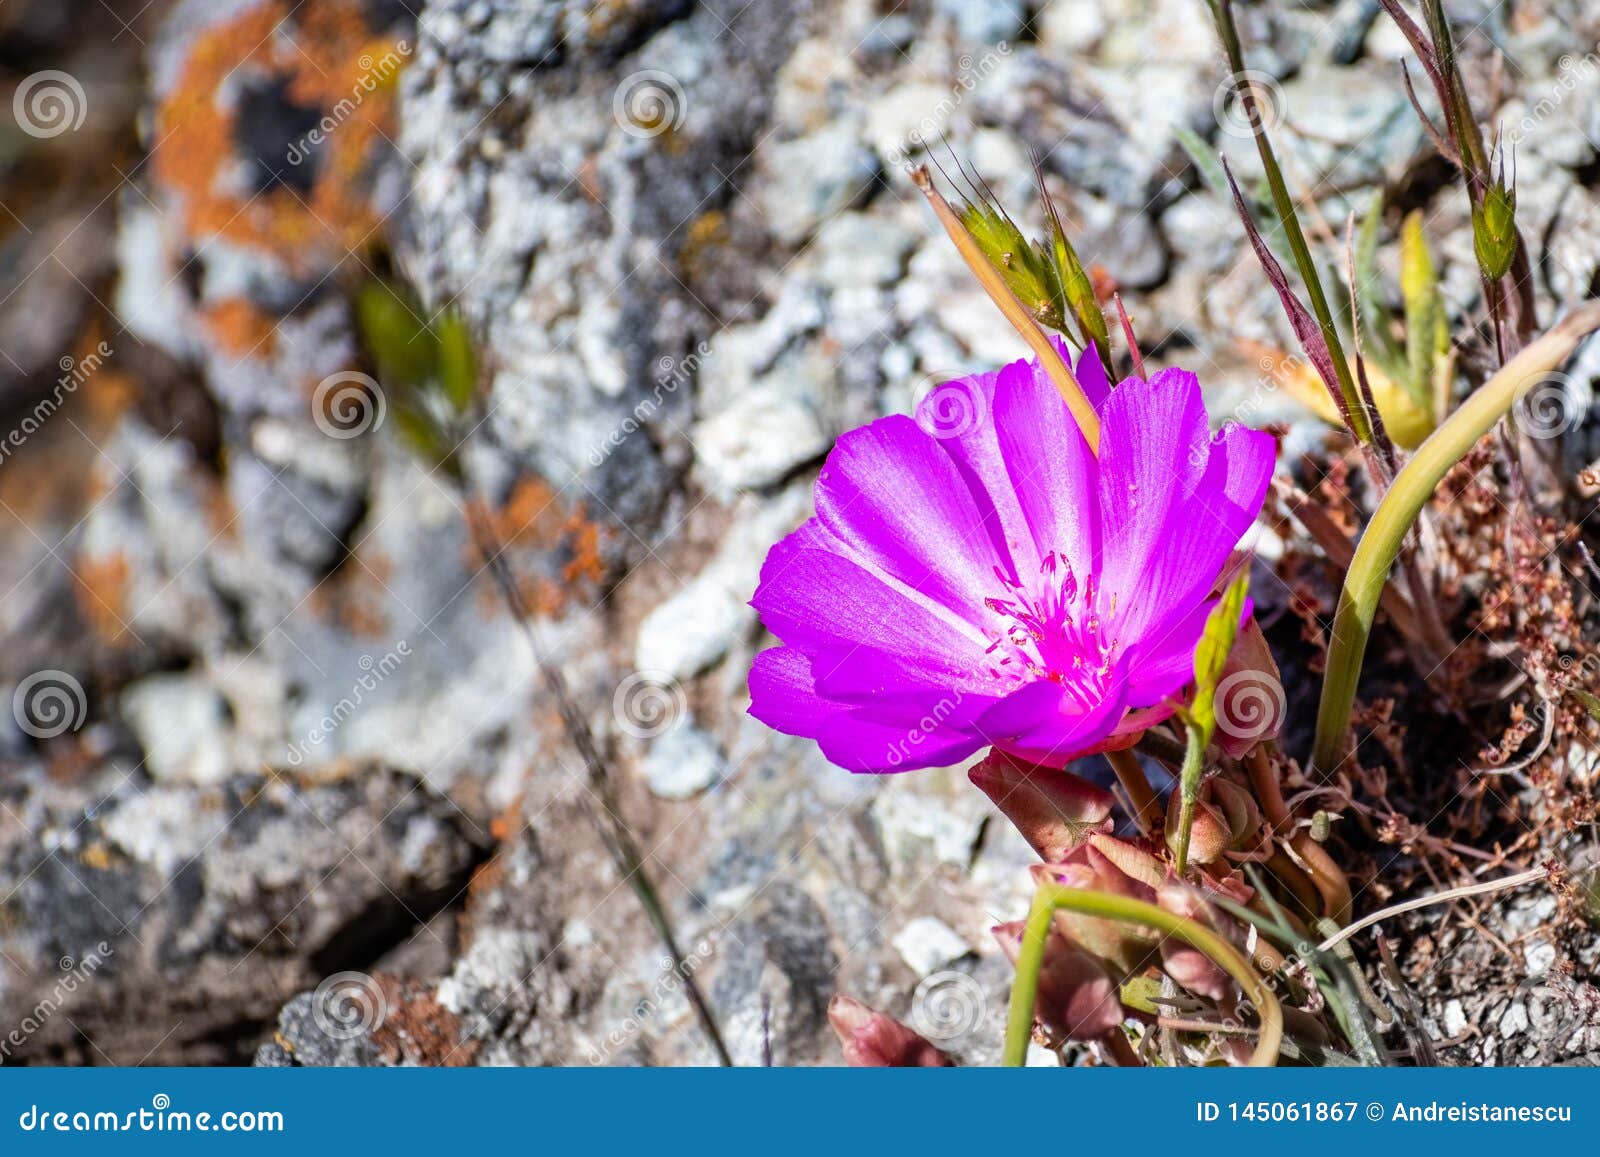 bitterroot lewisia rediviva, the state flower of montana; blooming in spring in santa cruz mountains, south san francisco bay